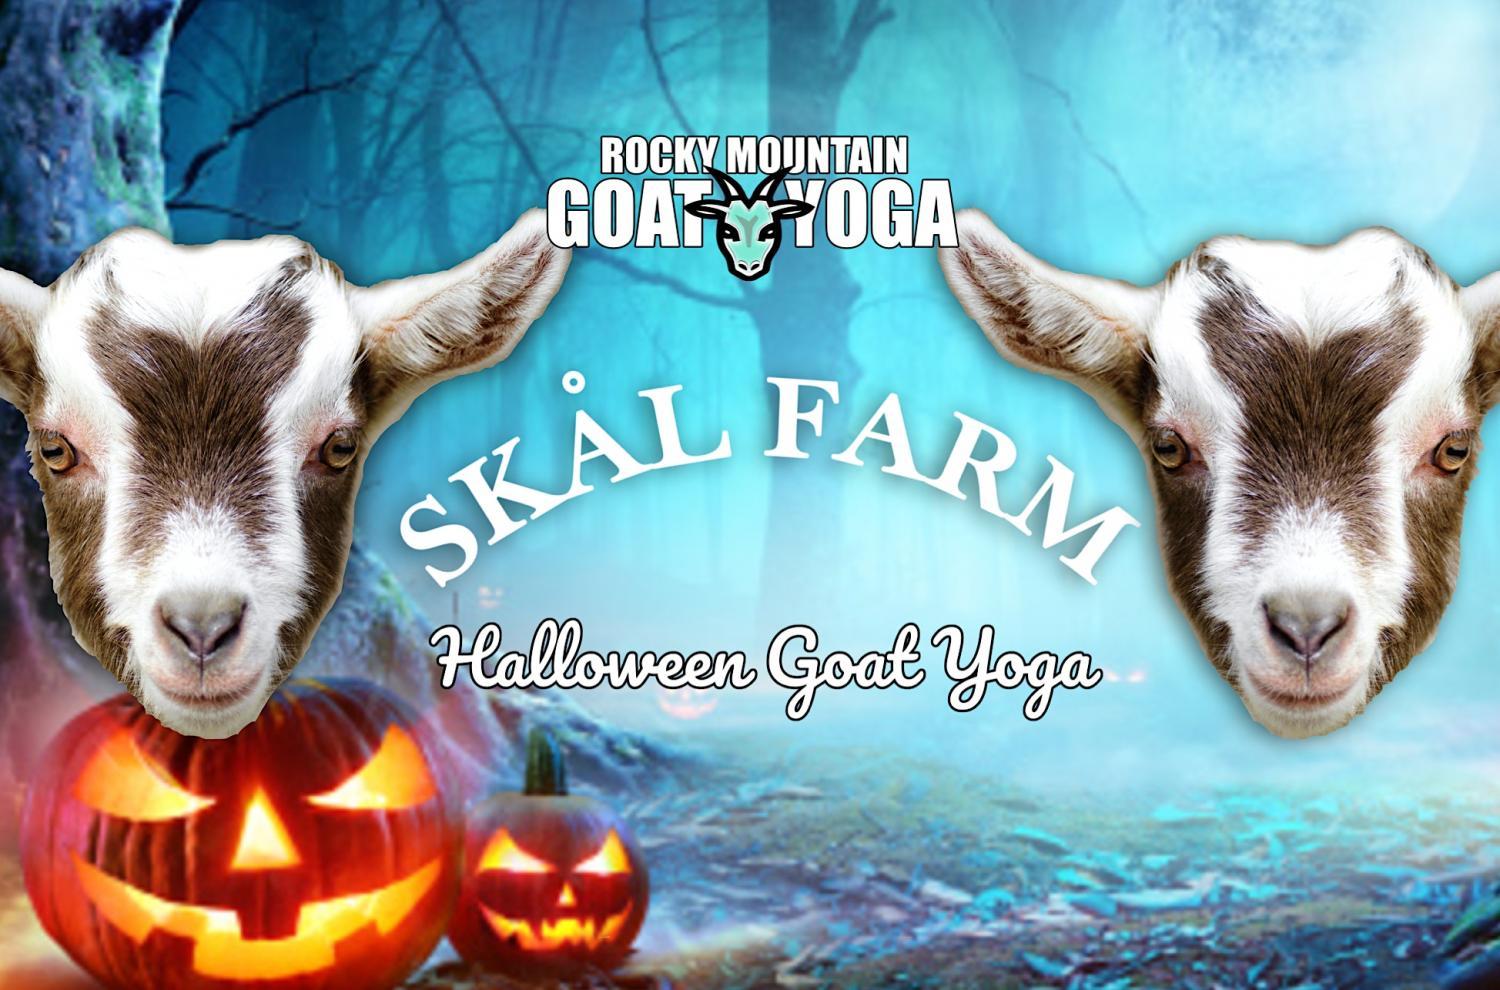 Halloween Goat Yoga - October 30th (Skål Farm)
Sun Oct 30, 4:00 PM - Sun Oct 30, 5:00 PM
in 13 days